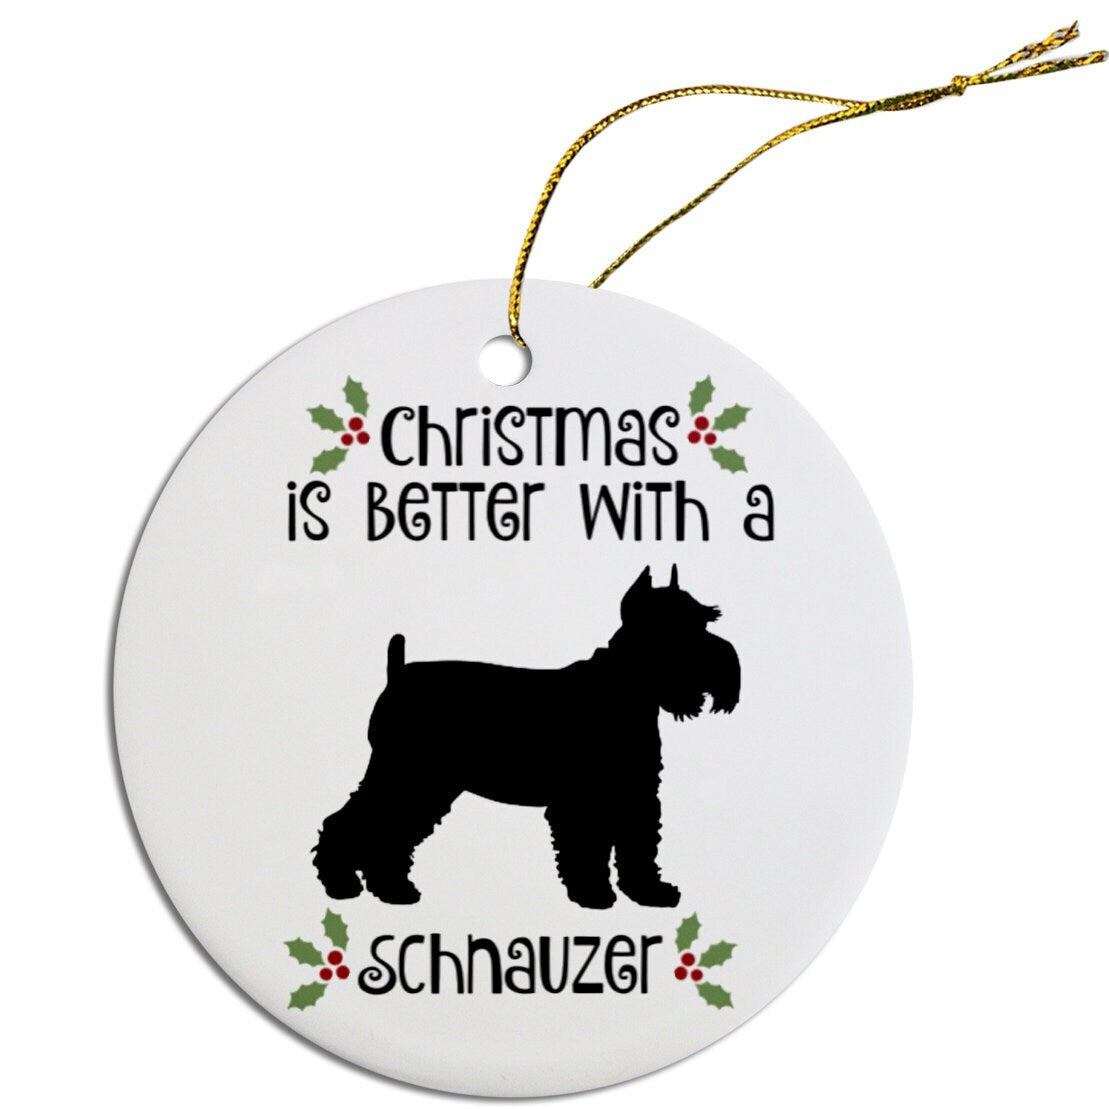 Dog Breed Specific Round Christmas Ornament, "Schnauzer"